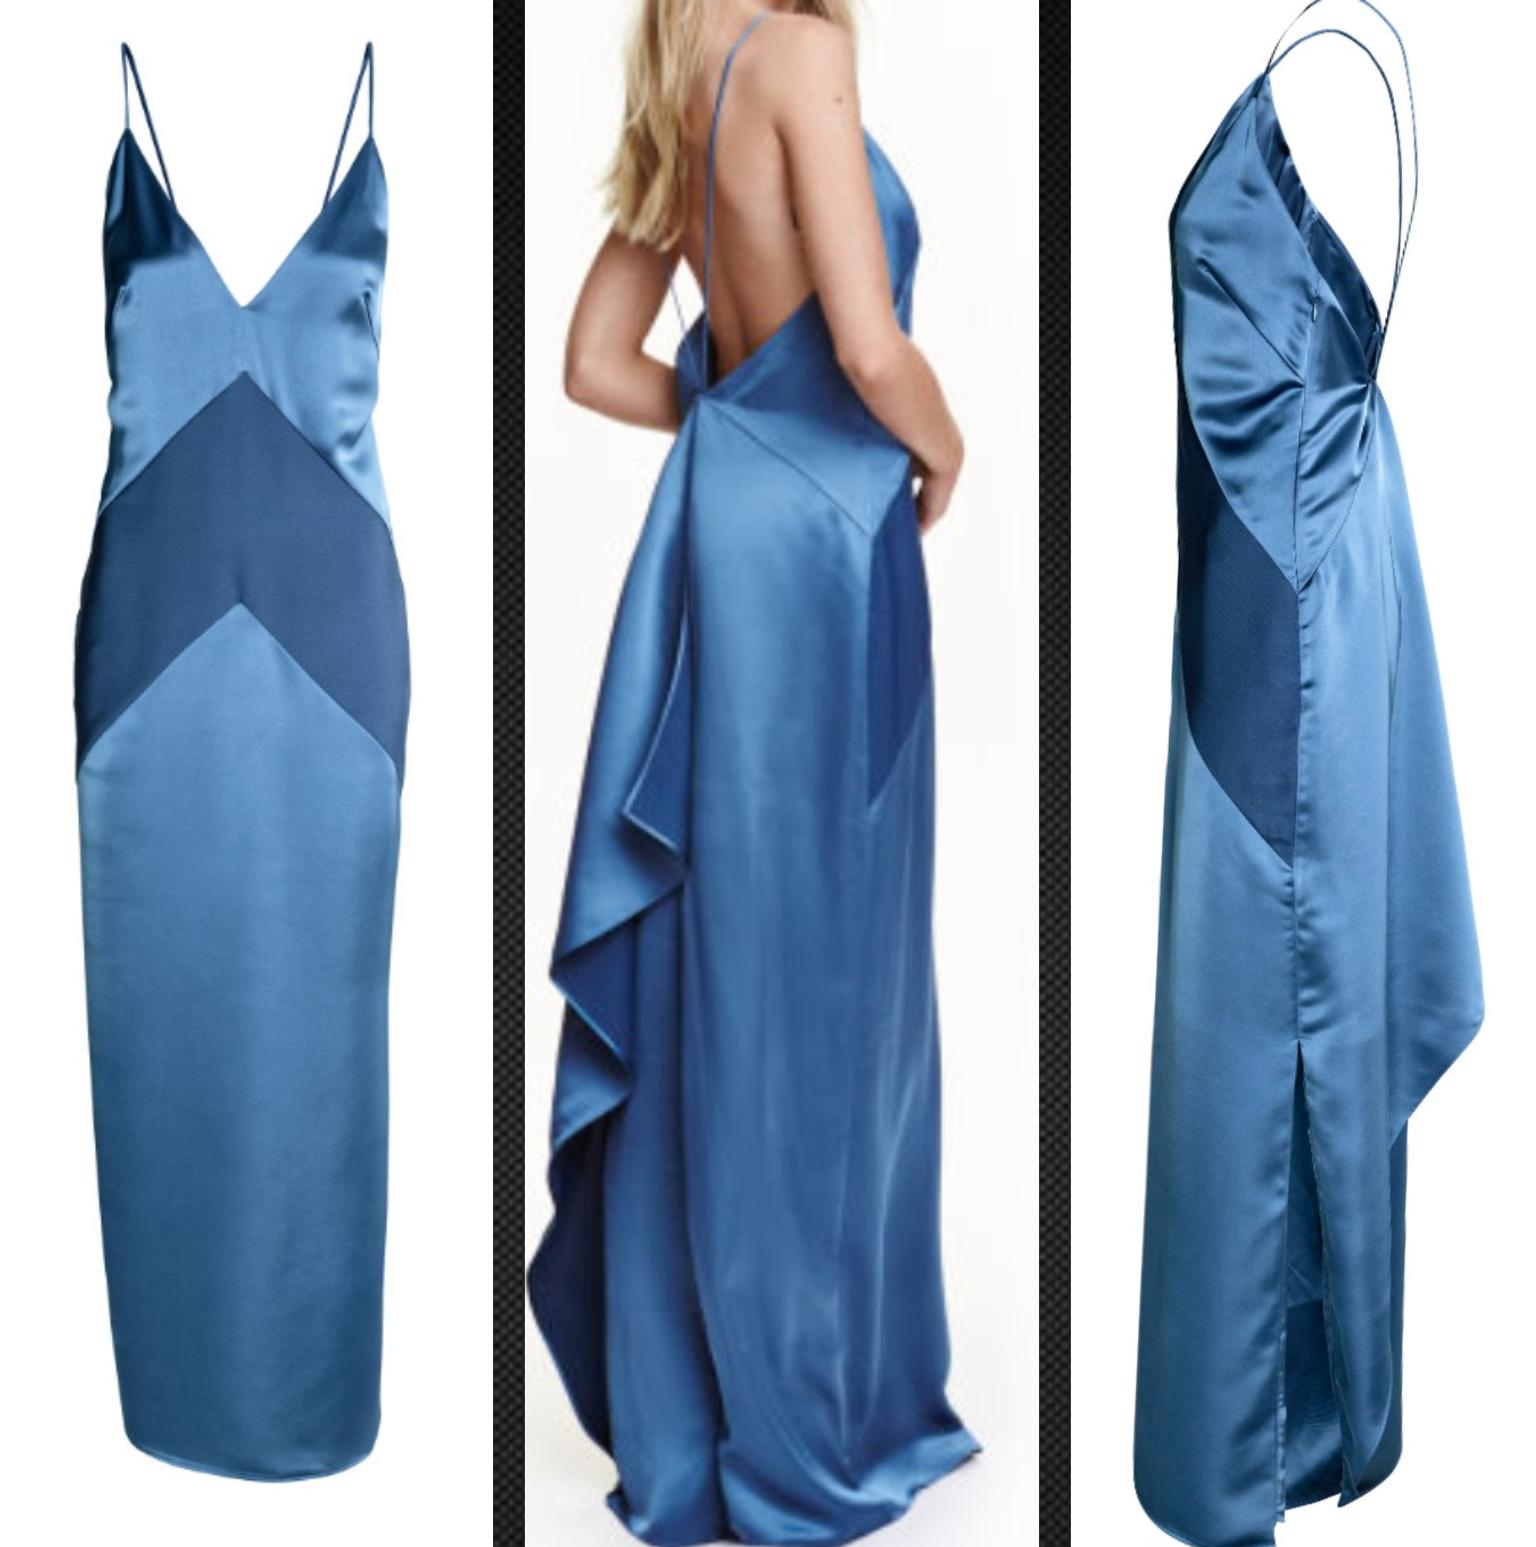 h&m long blue dress